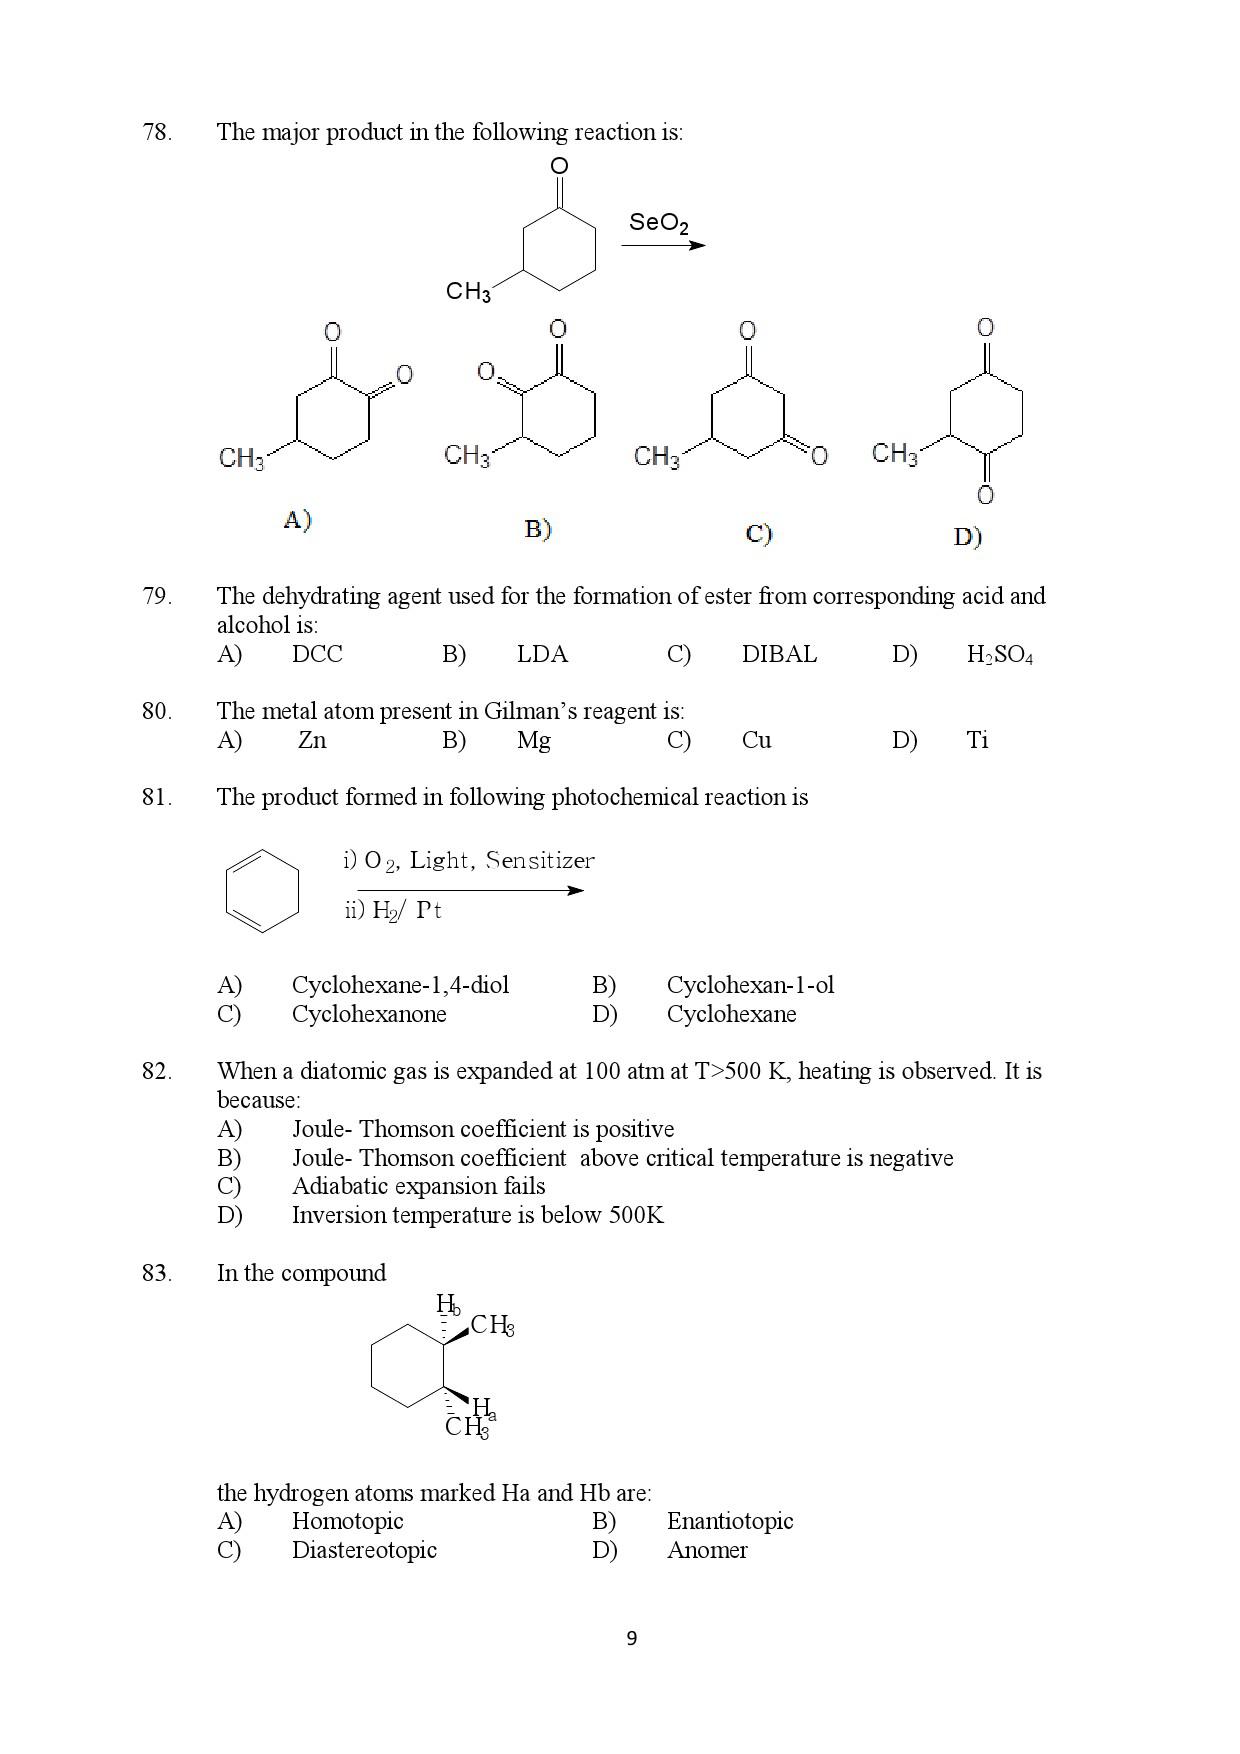 Kerala SET Chemistry Question Paper July 2019 9